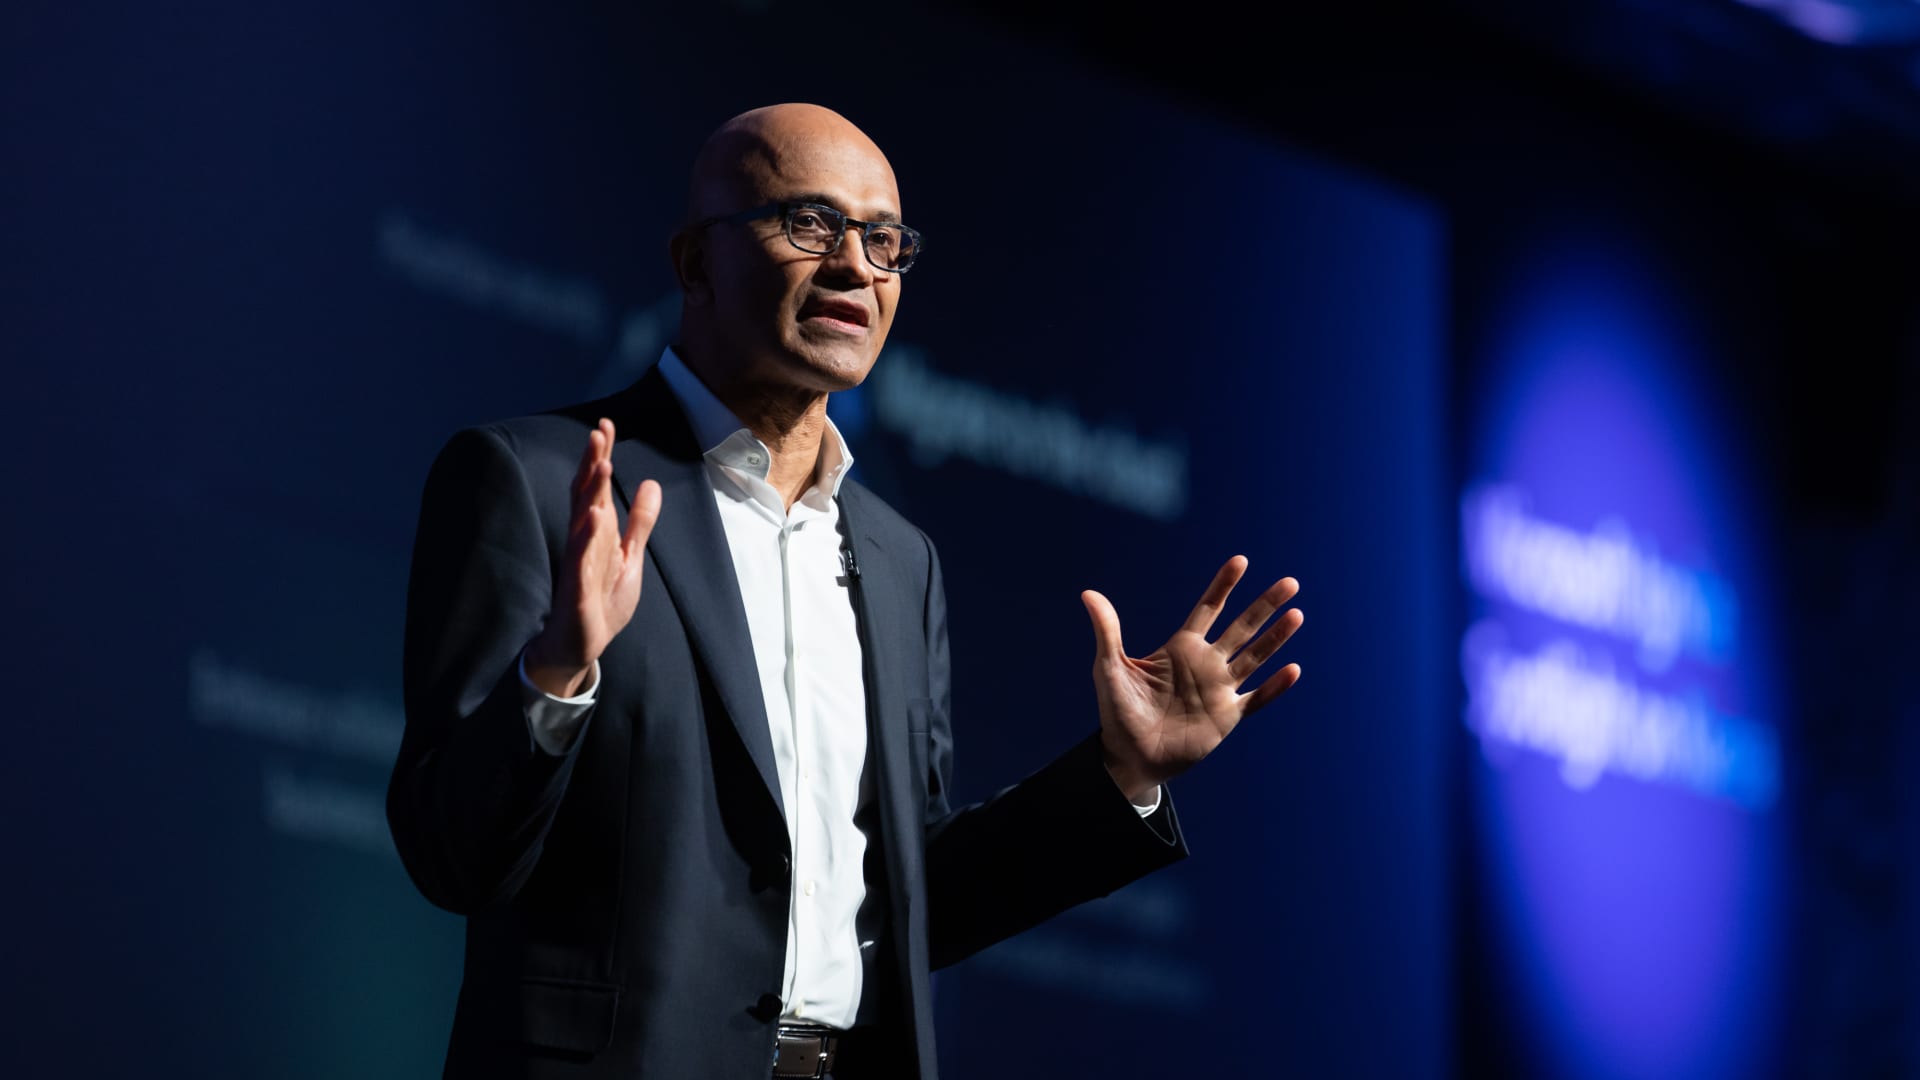 Microsoft Azure losing money on $29 bln in revenue